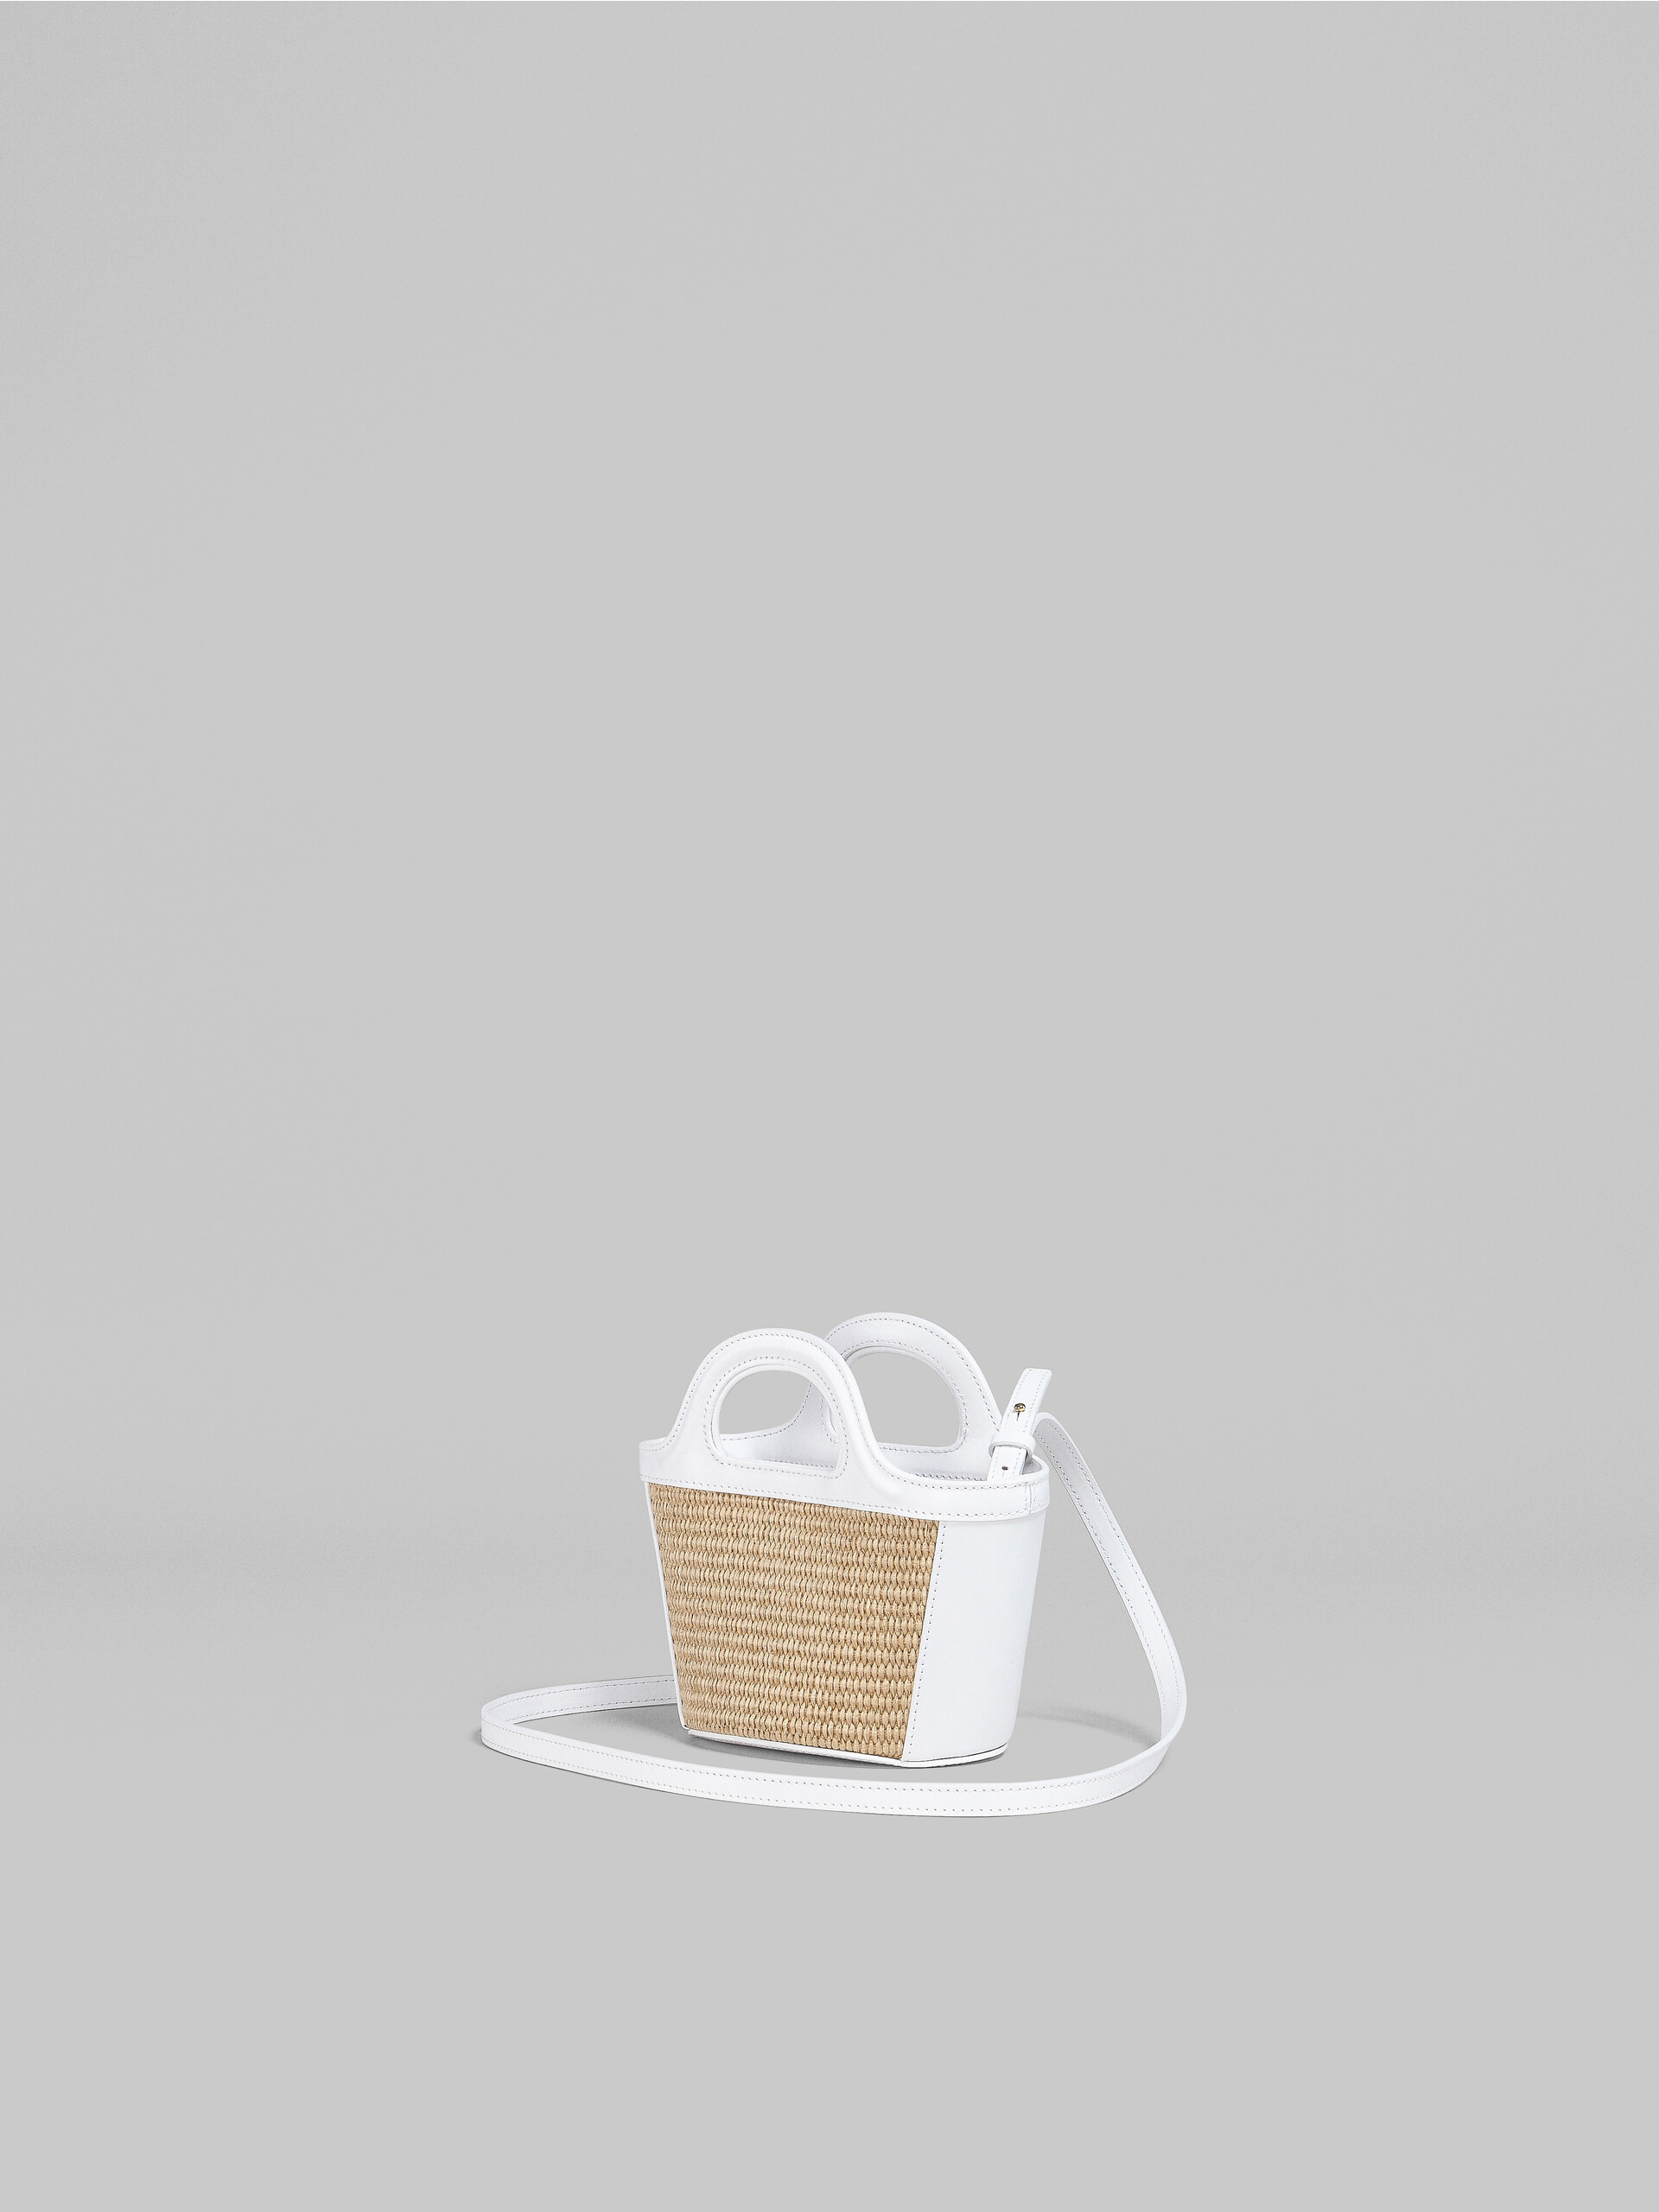 Tropicalia Micro Bag in white leather and raffia - Handbag - Image 2